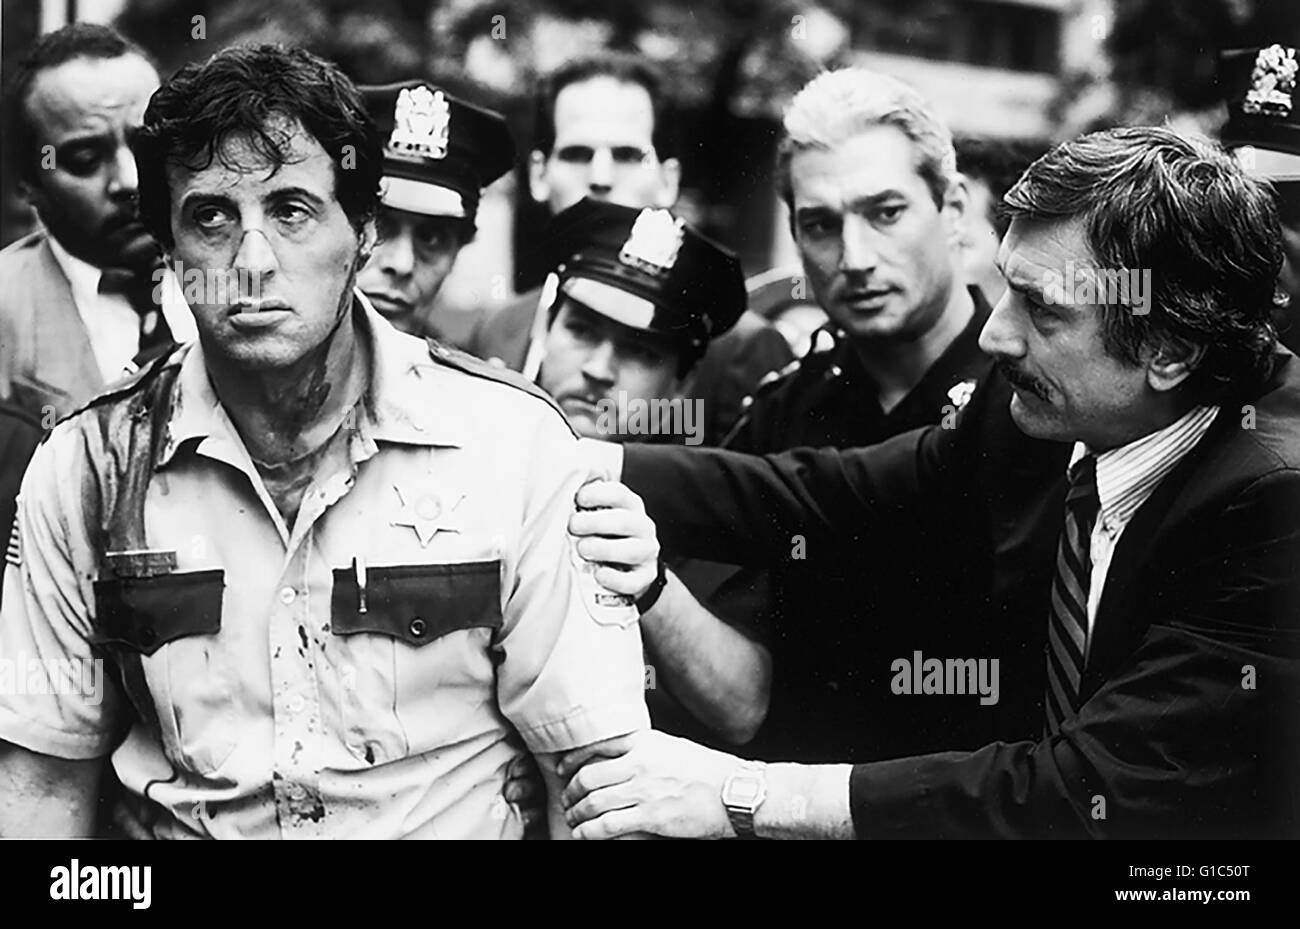 Cop Land / Sylvester Stallone, Stock Photo